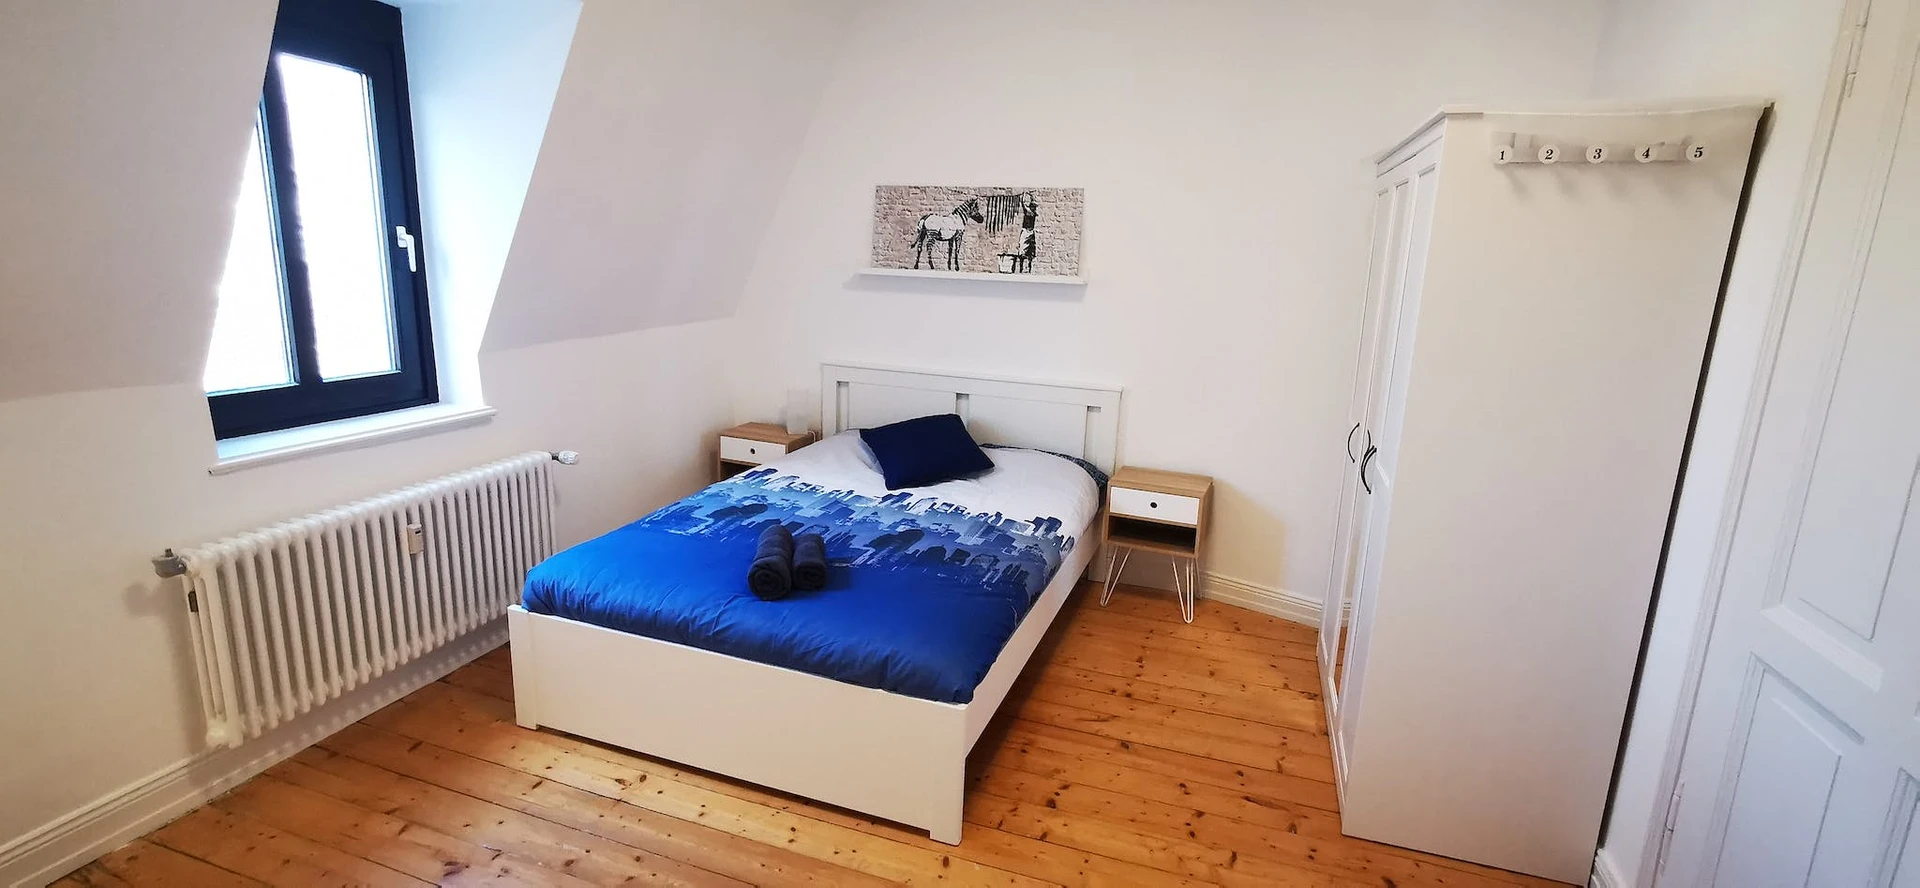 Alquiler de habitación en piso compartido en Bonn